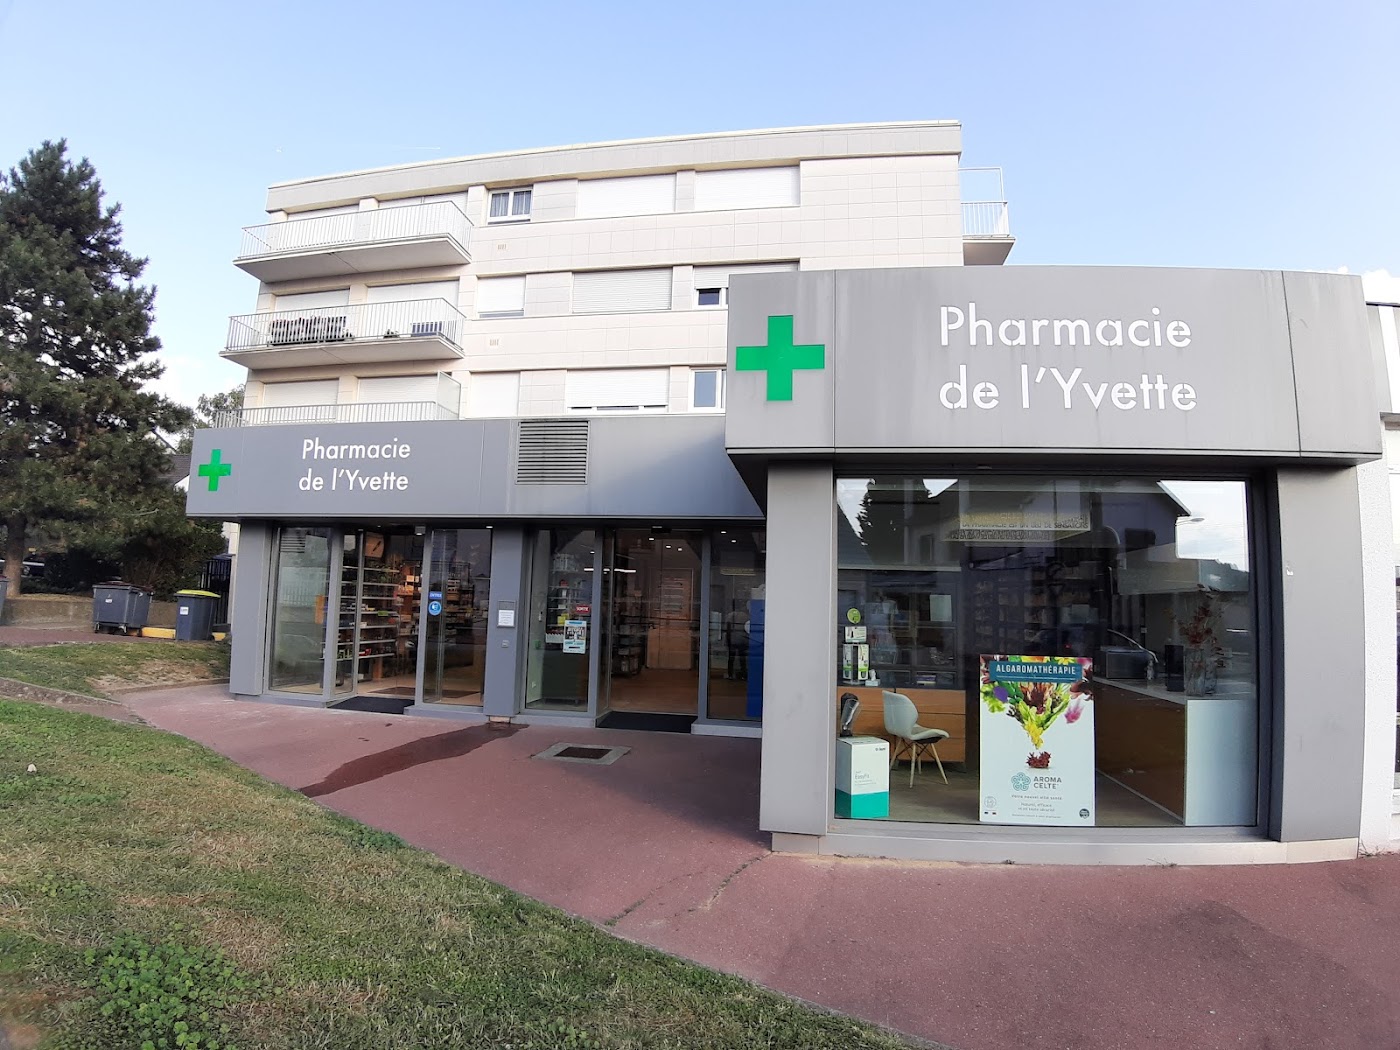 Pharmacie de l'Yvette